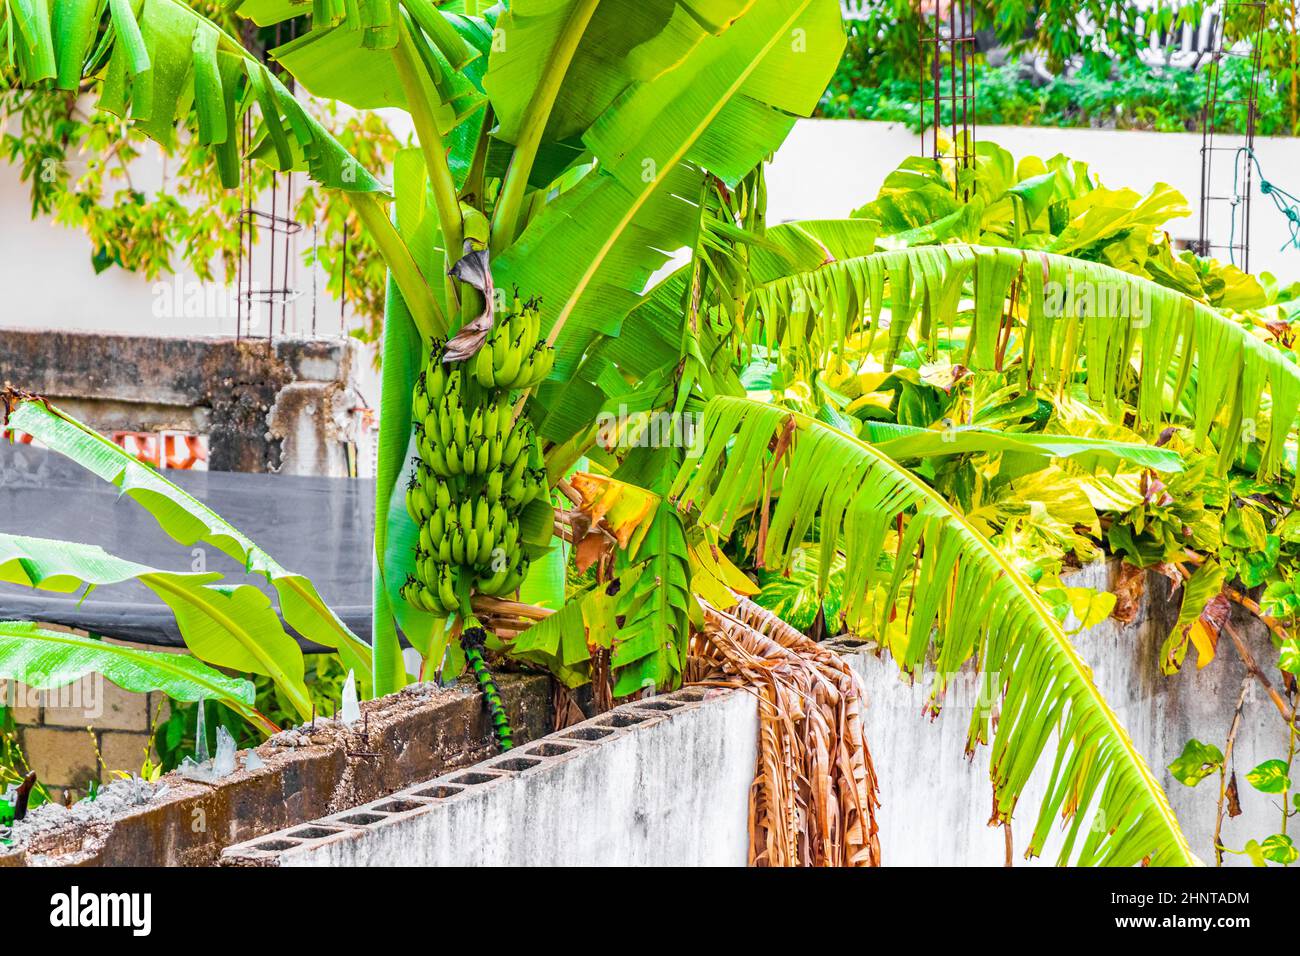 In Playa del Carmen, Mexiko, wachsen grüne gelbe Bananen. Stockfoto